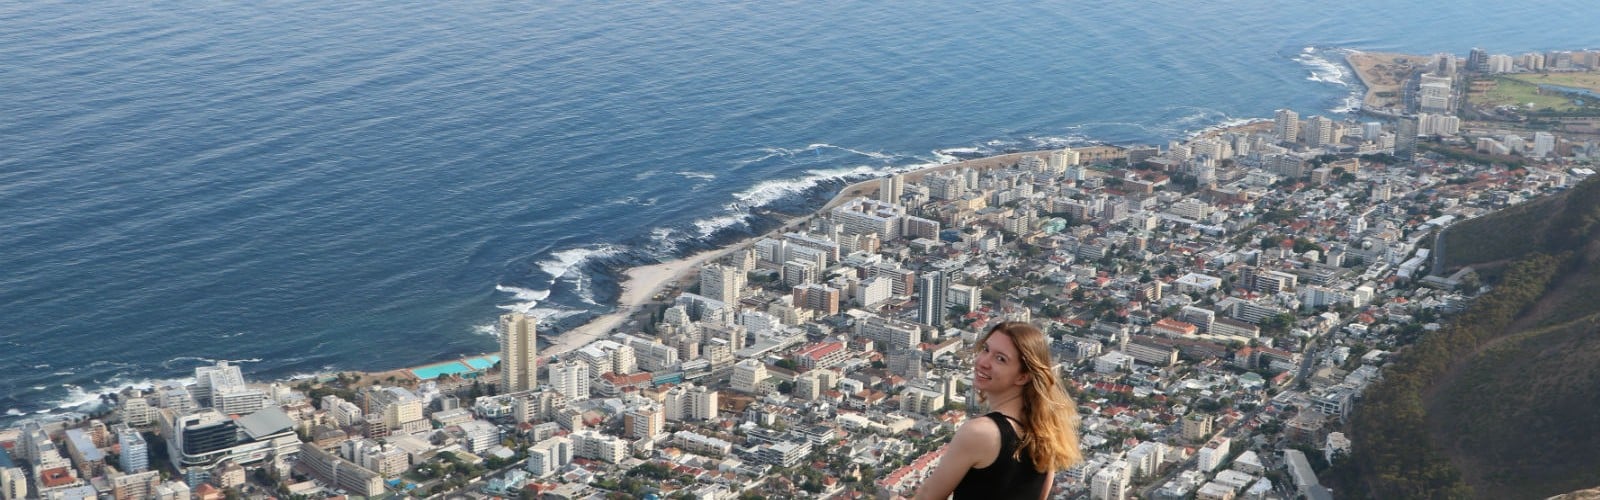 Meet the Intern Chiara: Reflections of an NGO Internship in Cape Town